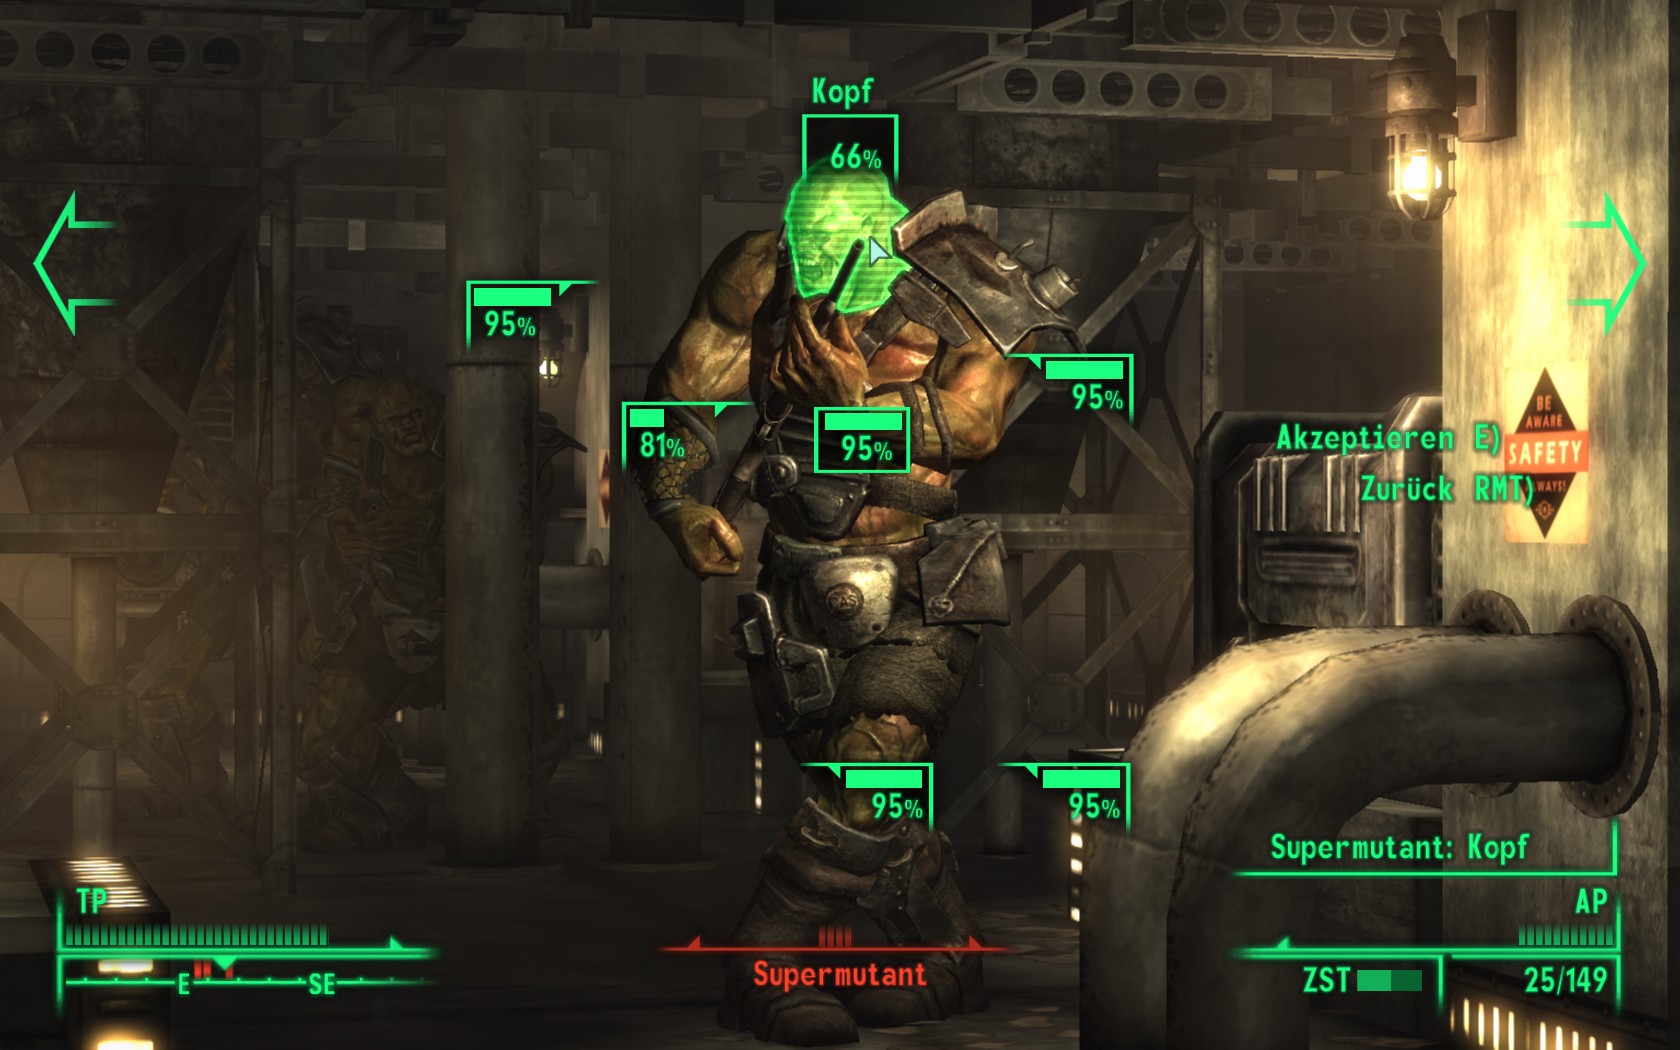 Spieletest: Fallout 3 - Abenteuer nach der Atombombe - Fallout 3